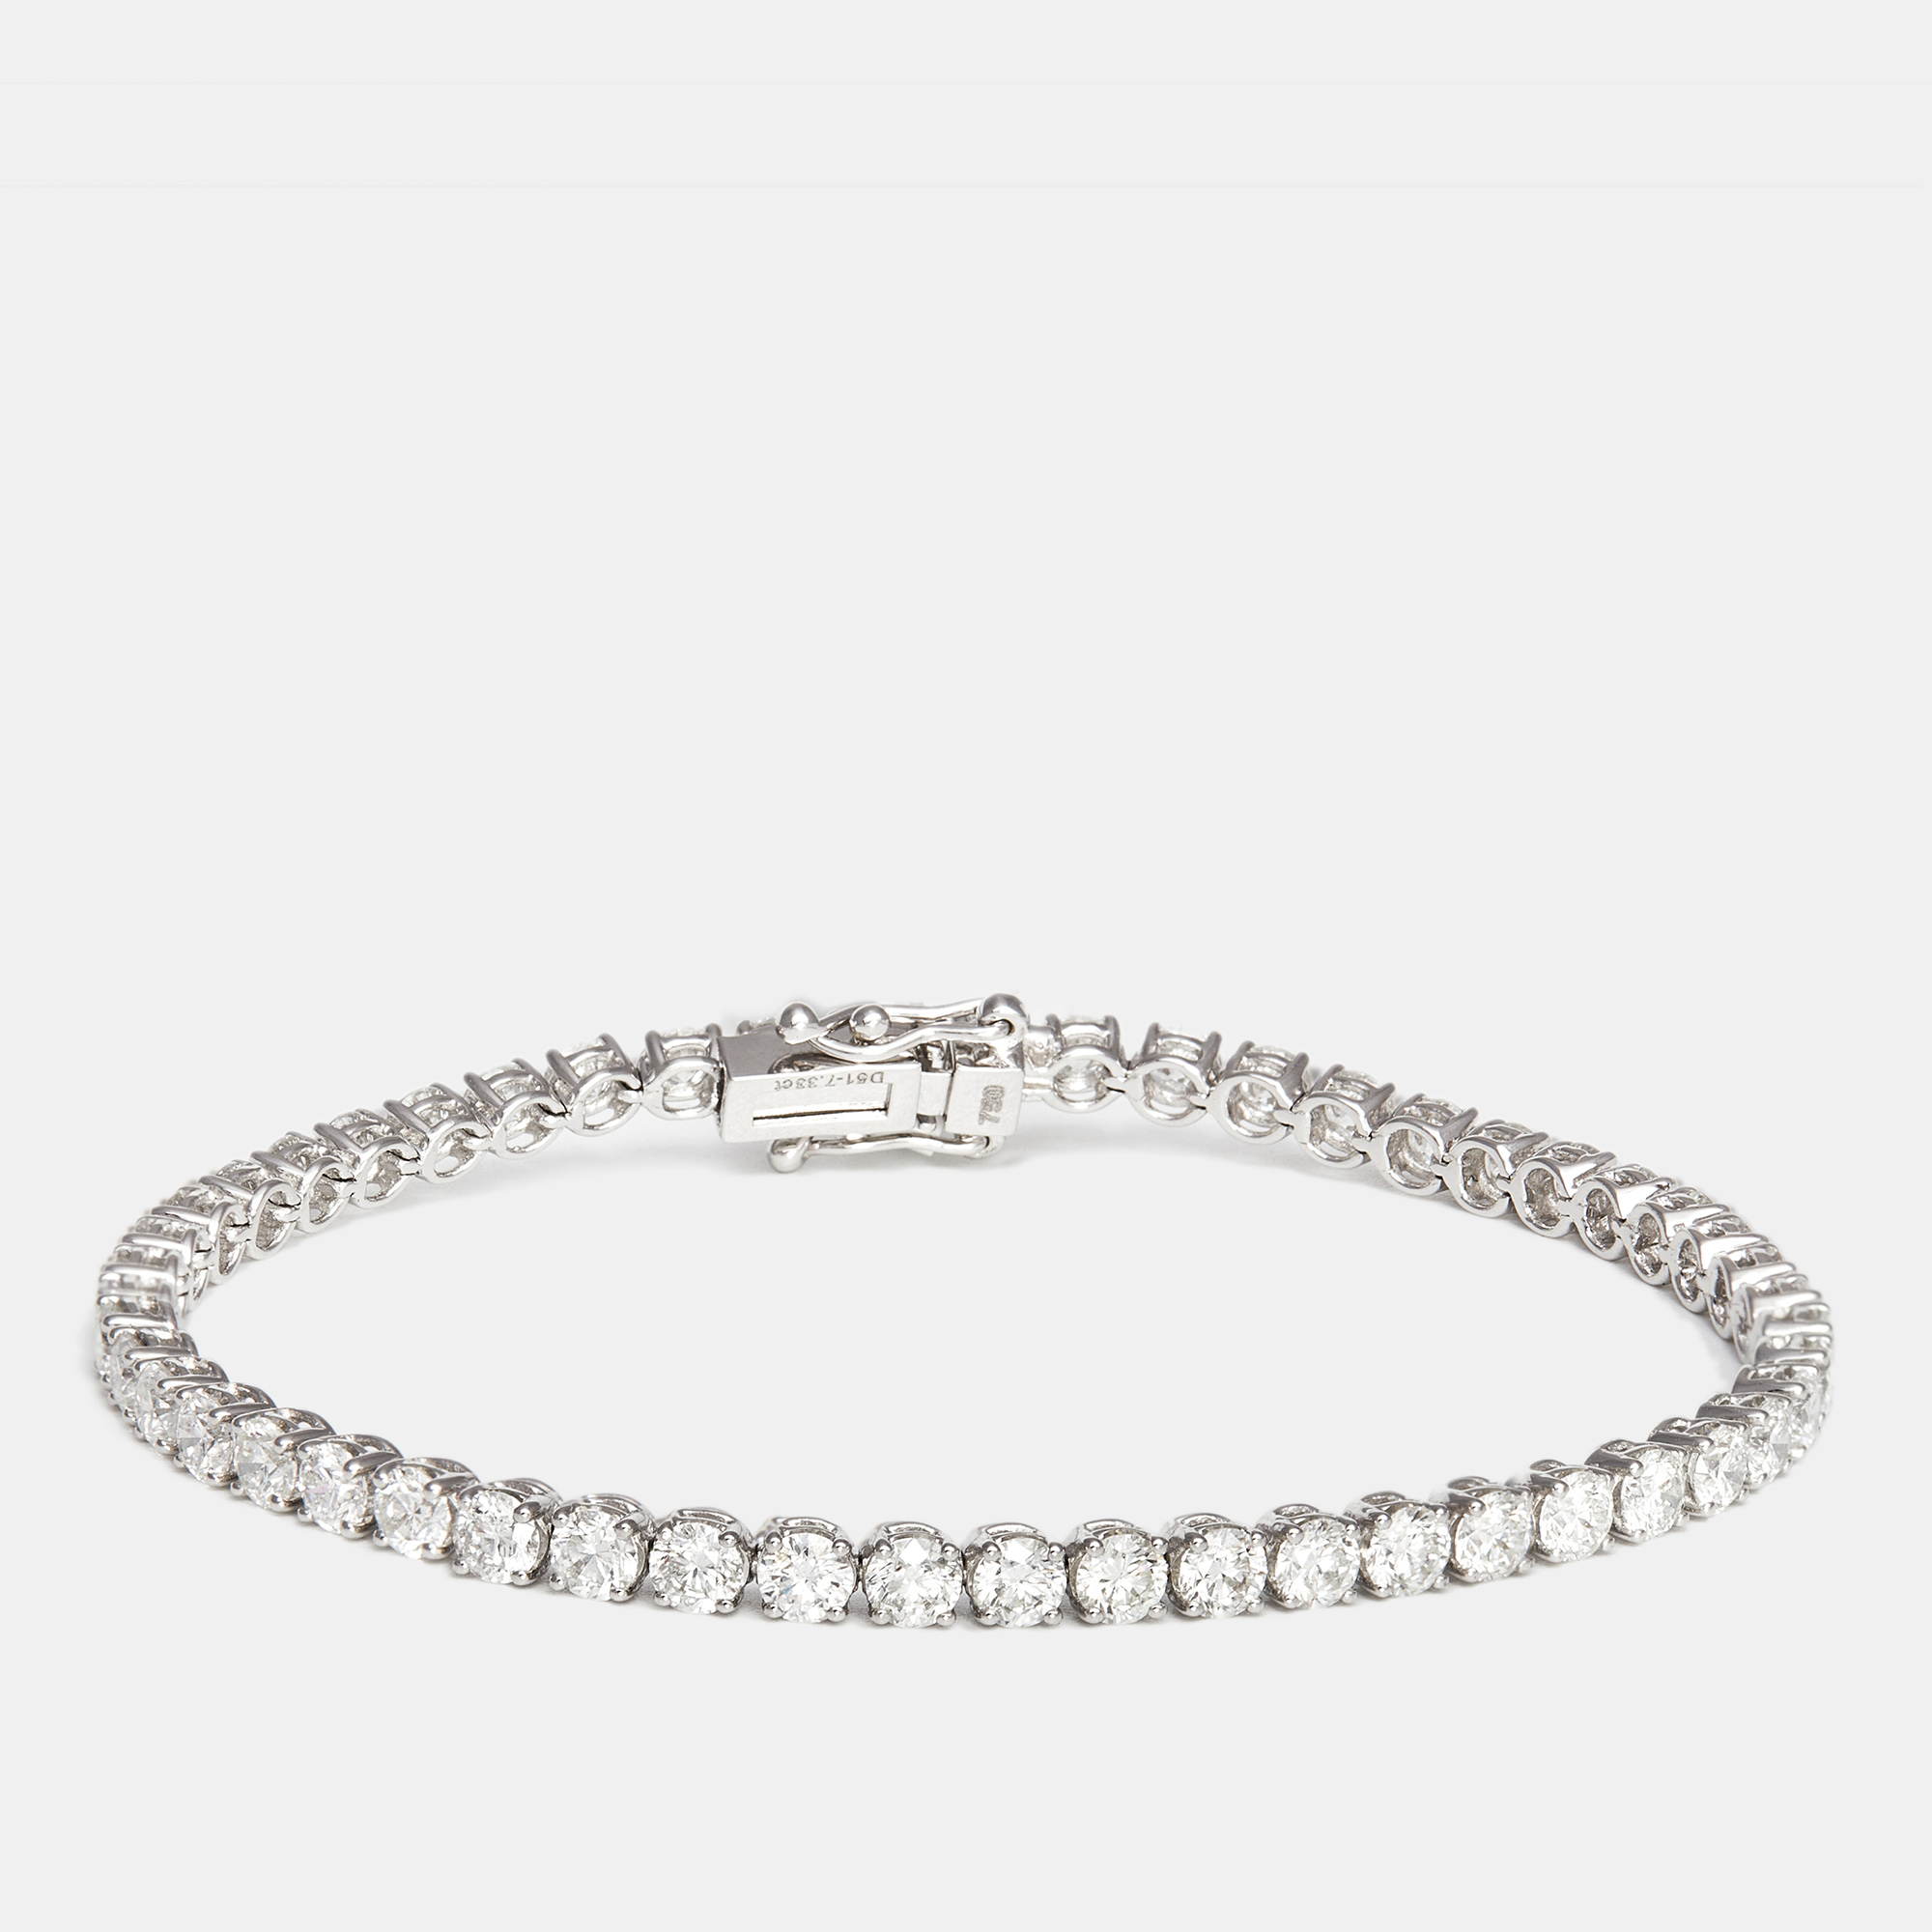 The diamond edit 18k white gold diamonds 7.33 cts elegant tennis bracelet